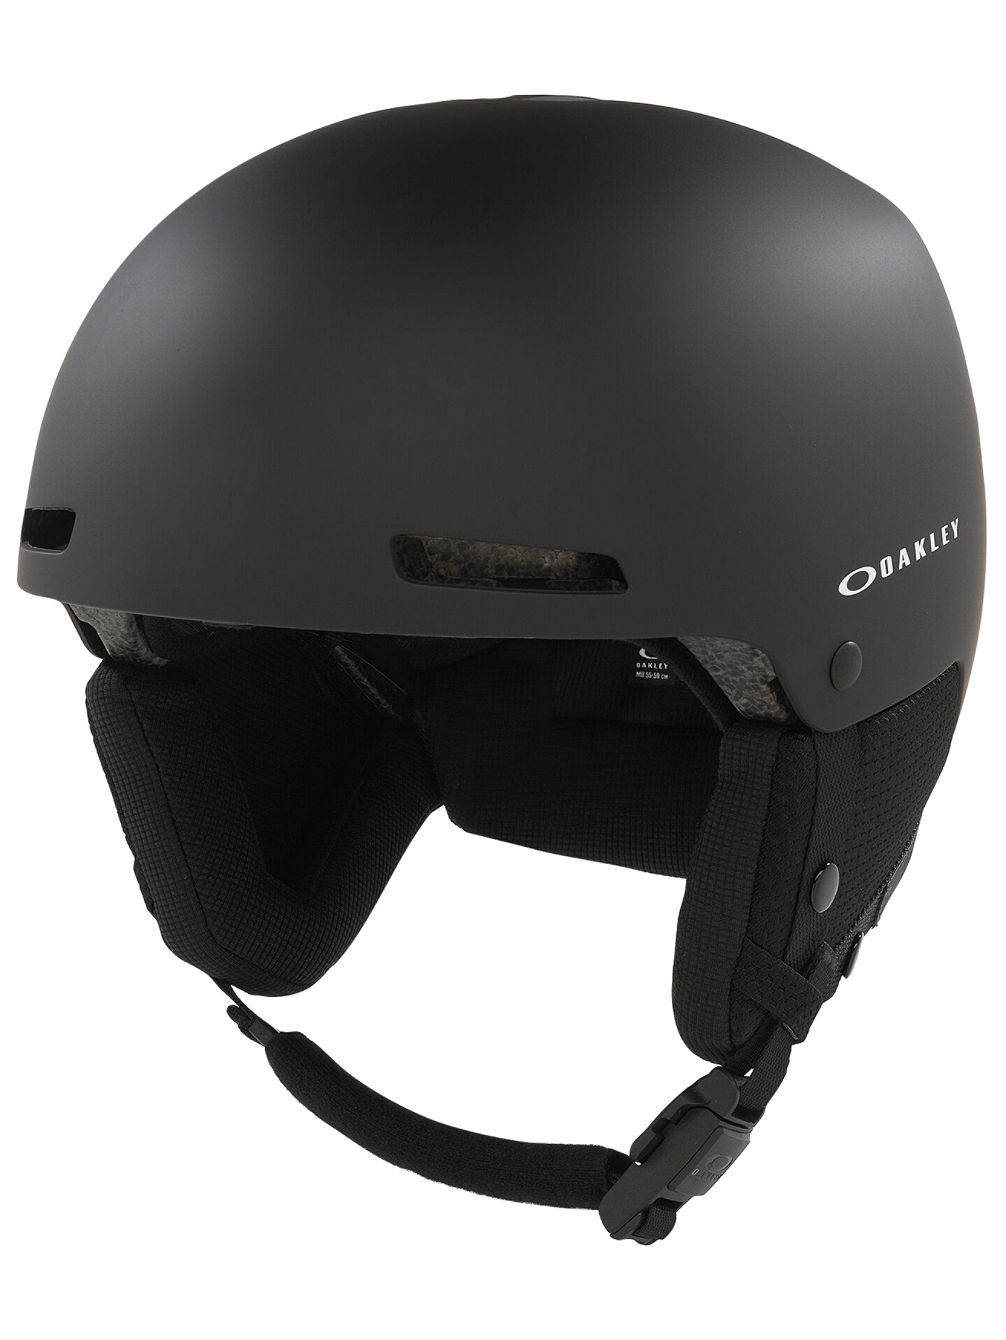 MOD1 Pro Helm